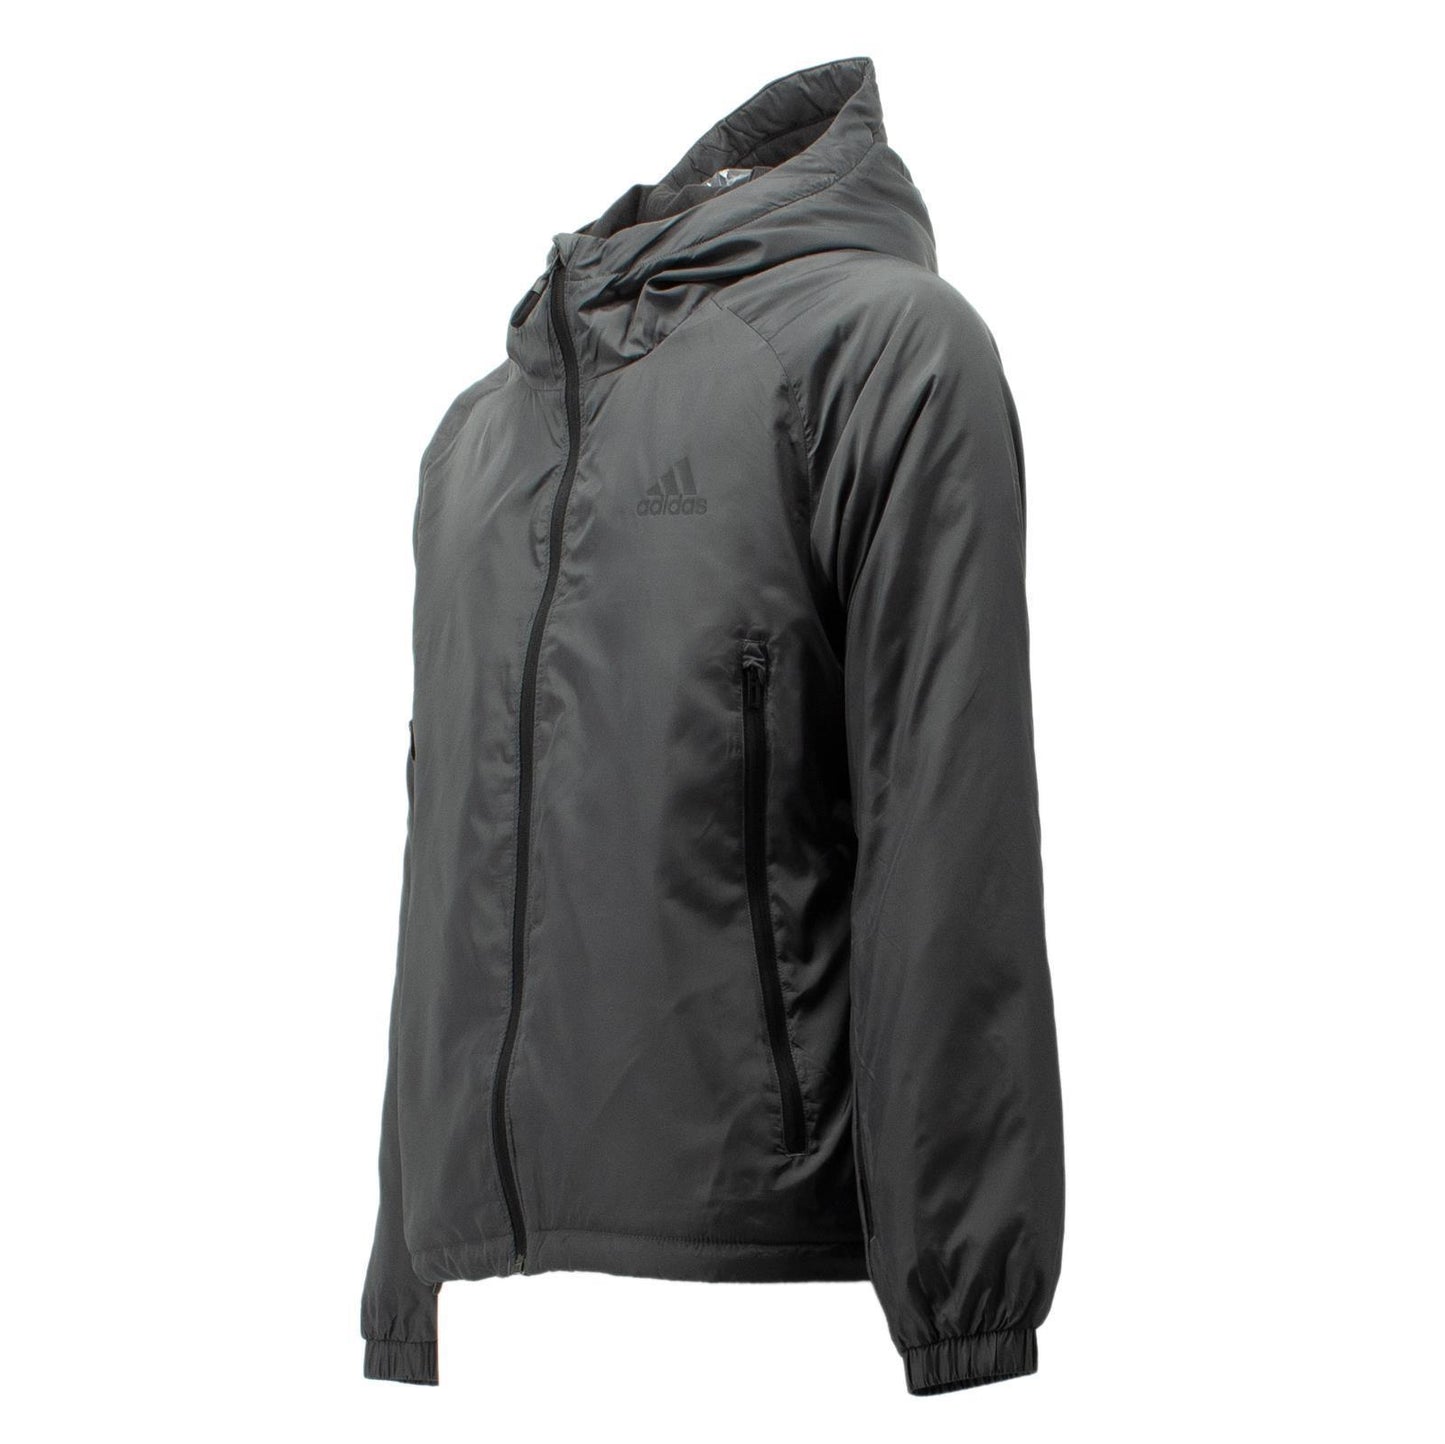 Adidas BTS Lined Jacket Essentials Insulated Outdoor Jacke Herren grau CV7463